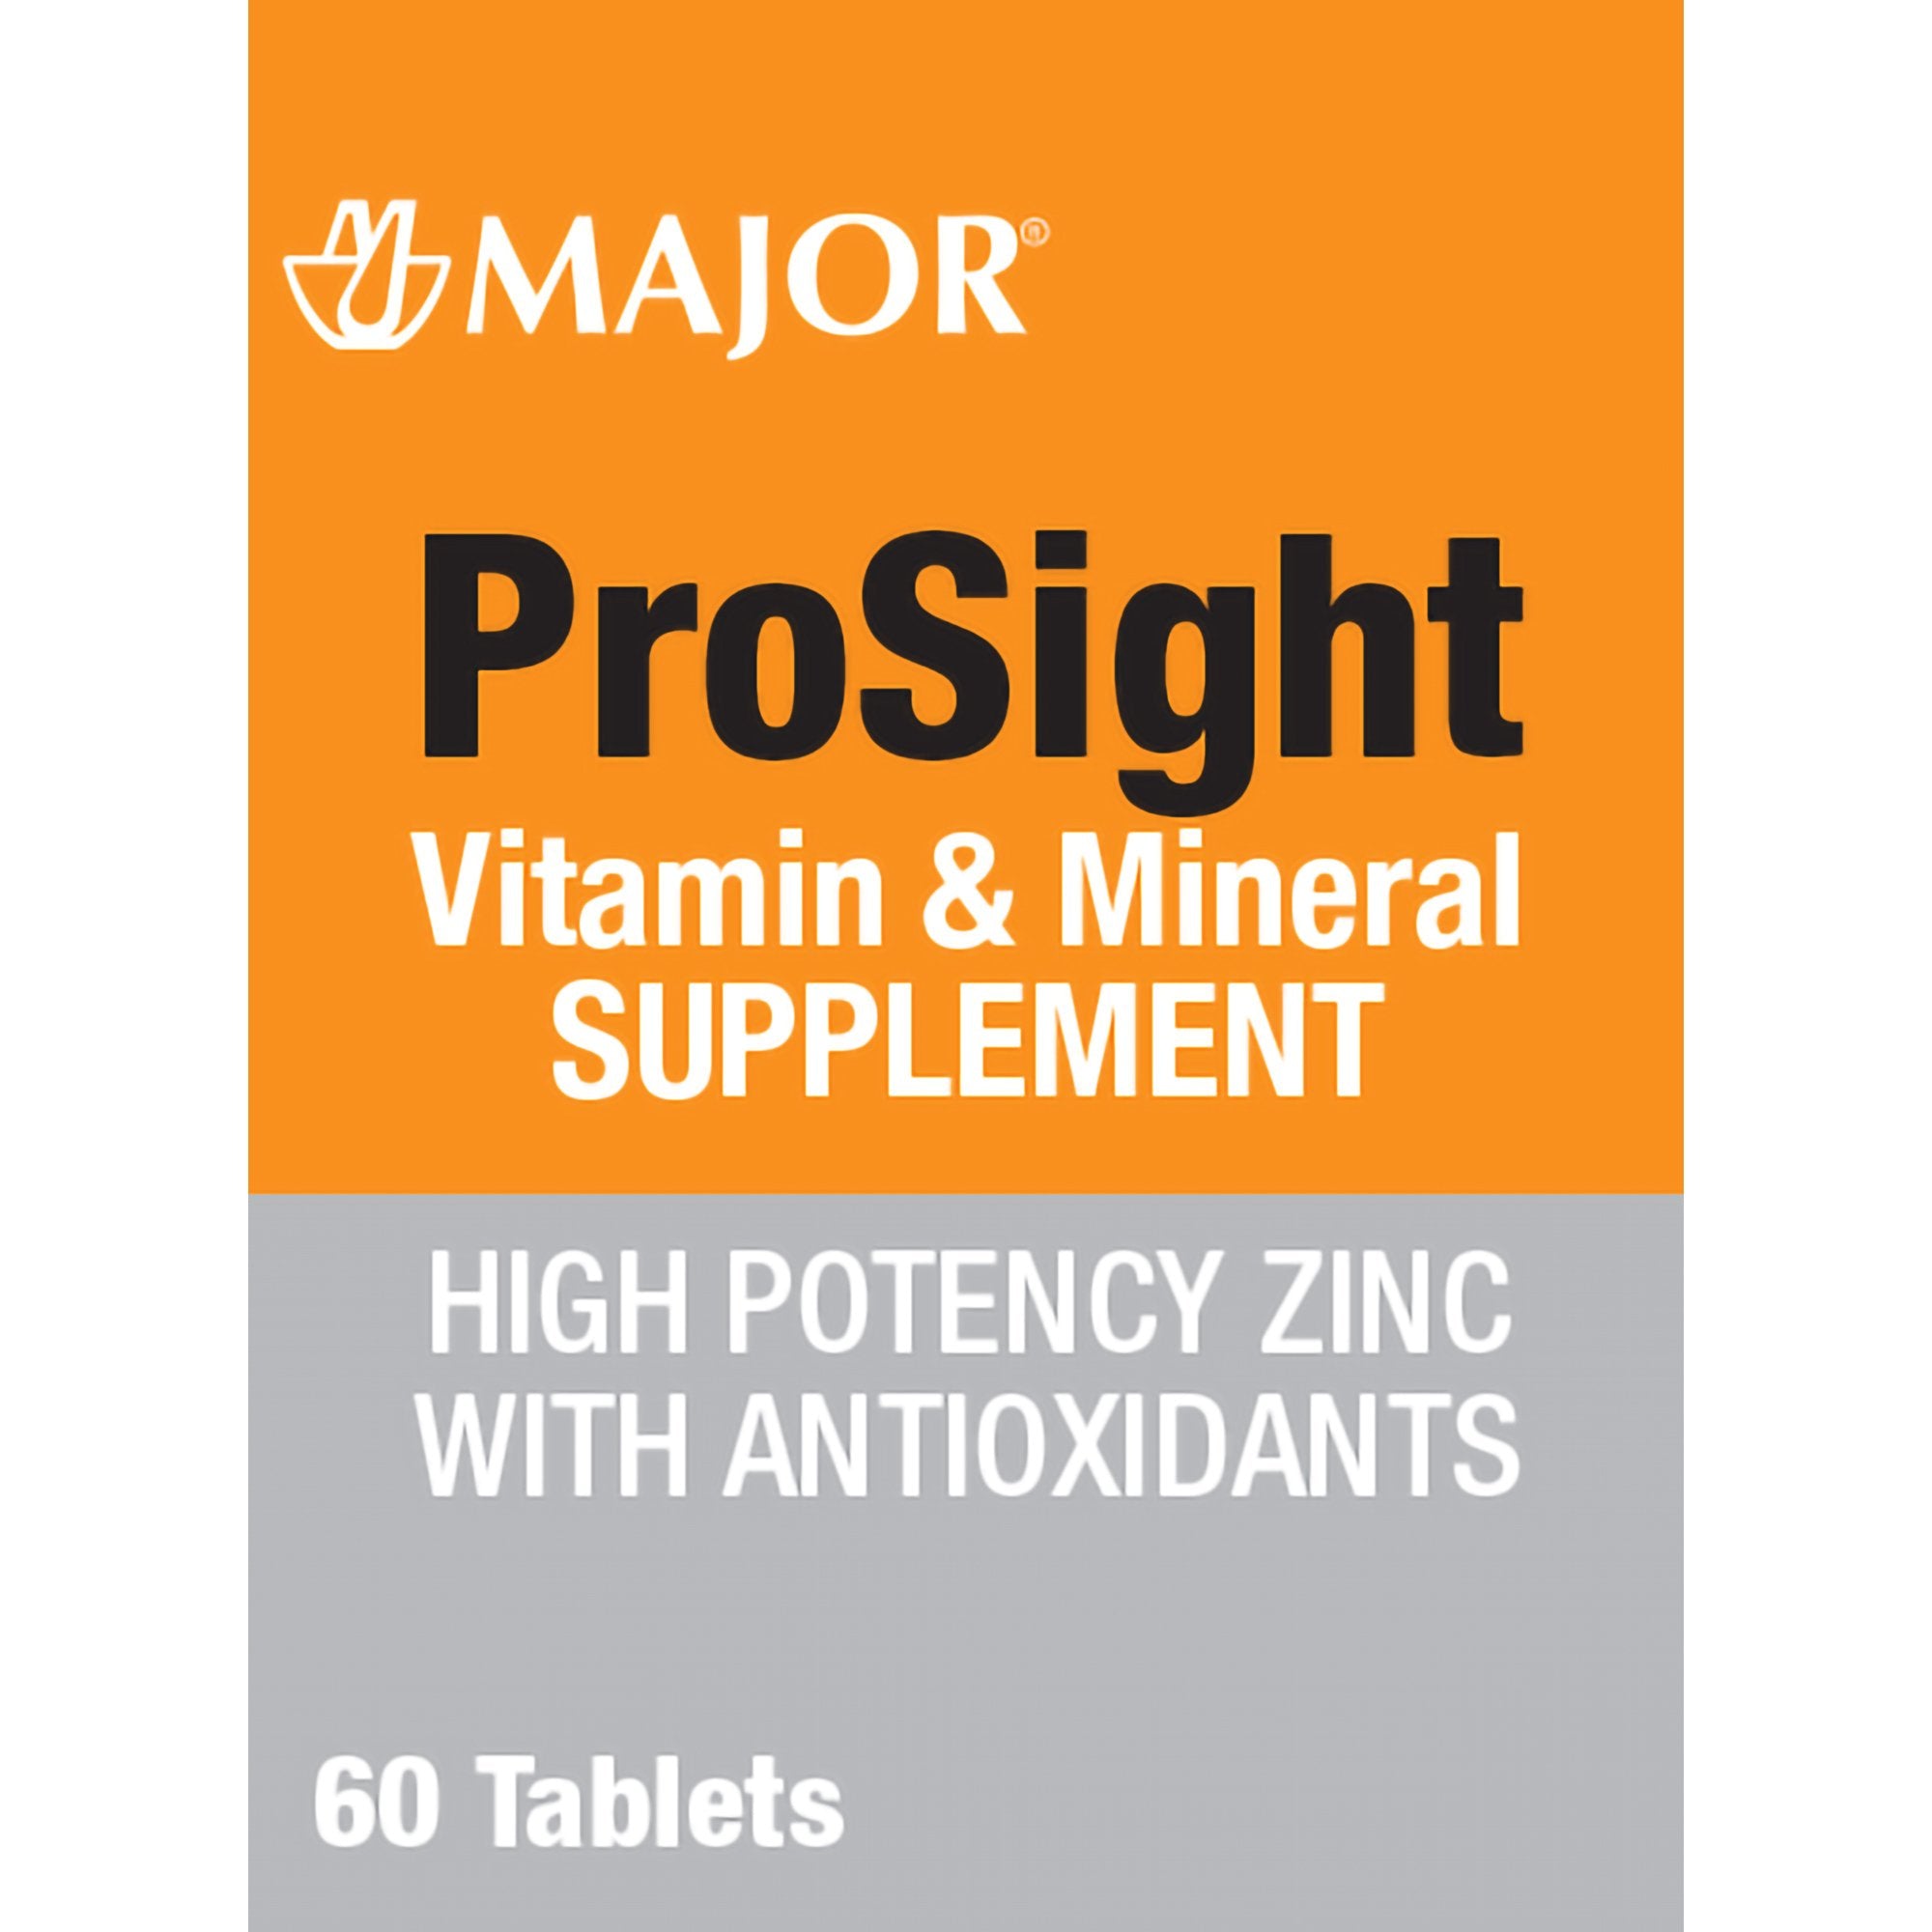 Multivitamin Supplement Prosight Vitamin A / Ascorbic Acid 5000 IU - 60 mg Strength Tablet 60 per Bottle